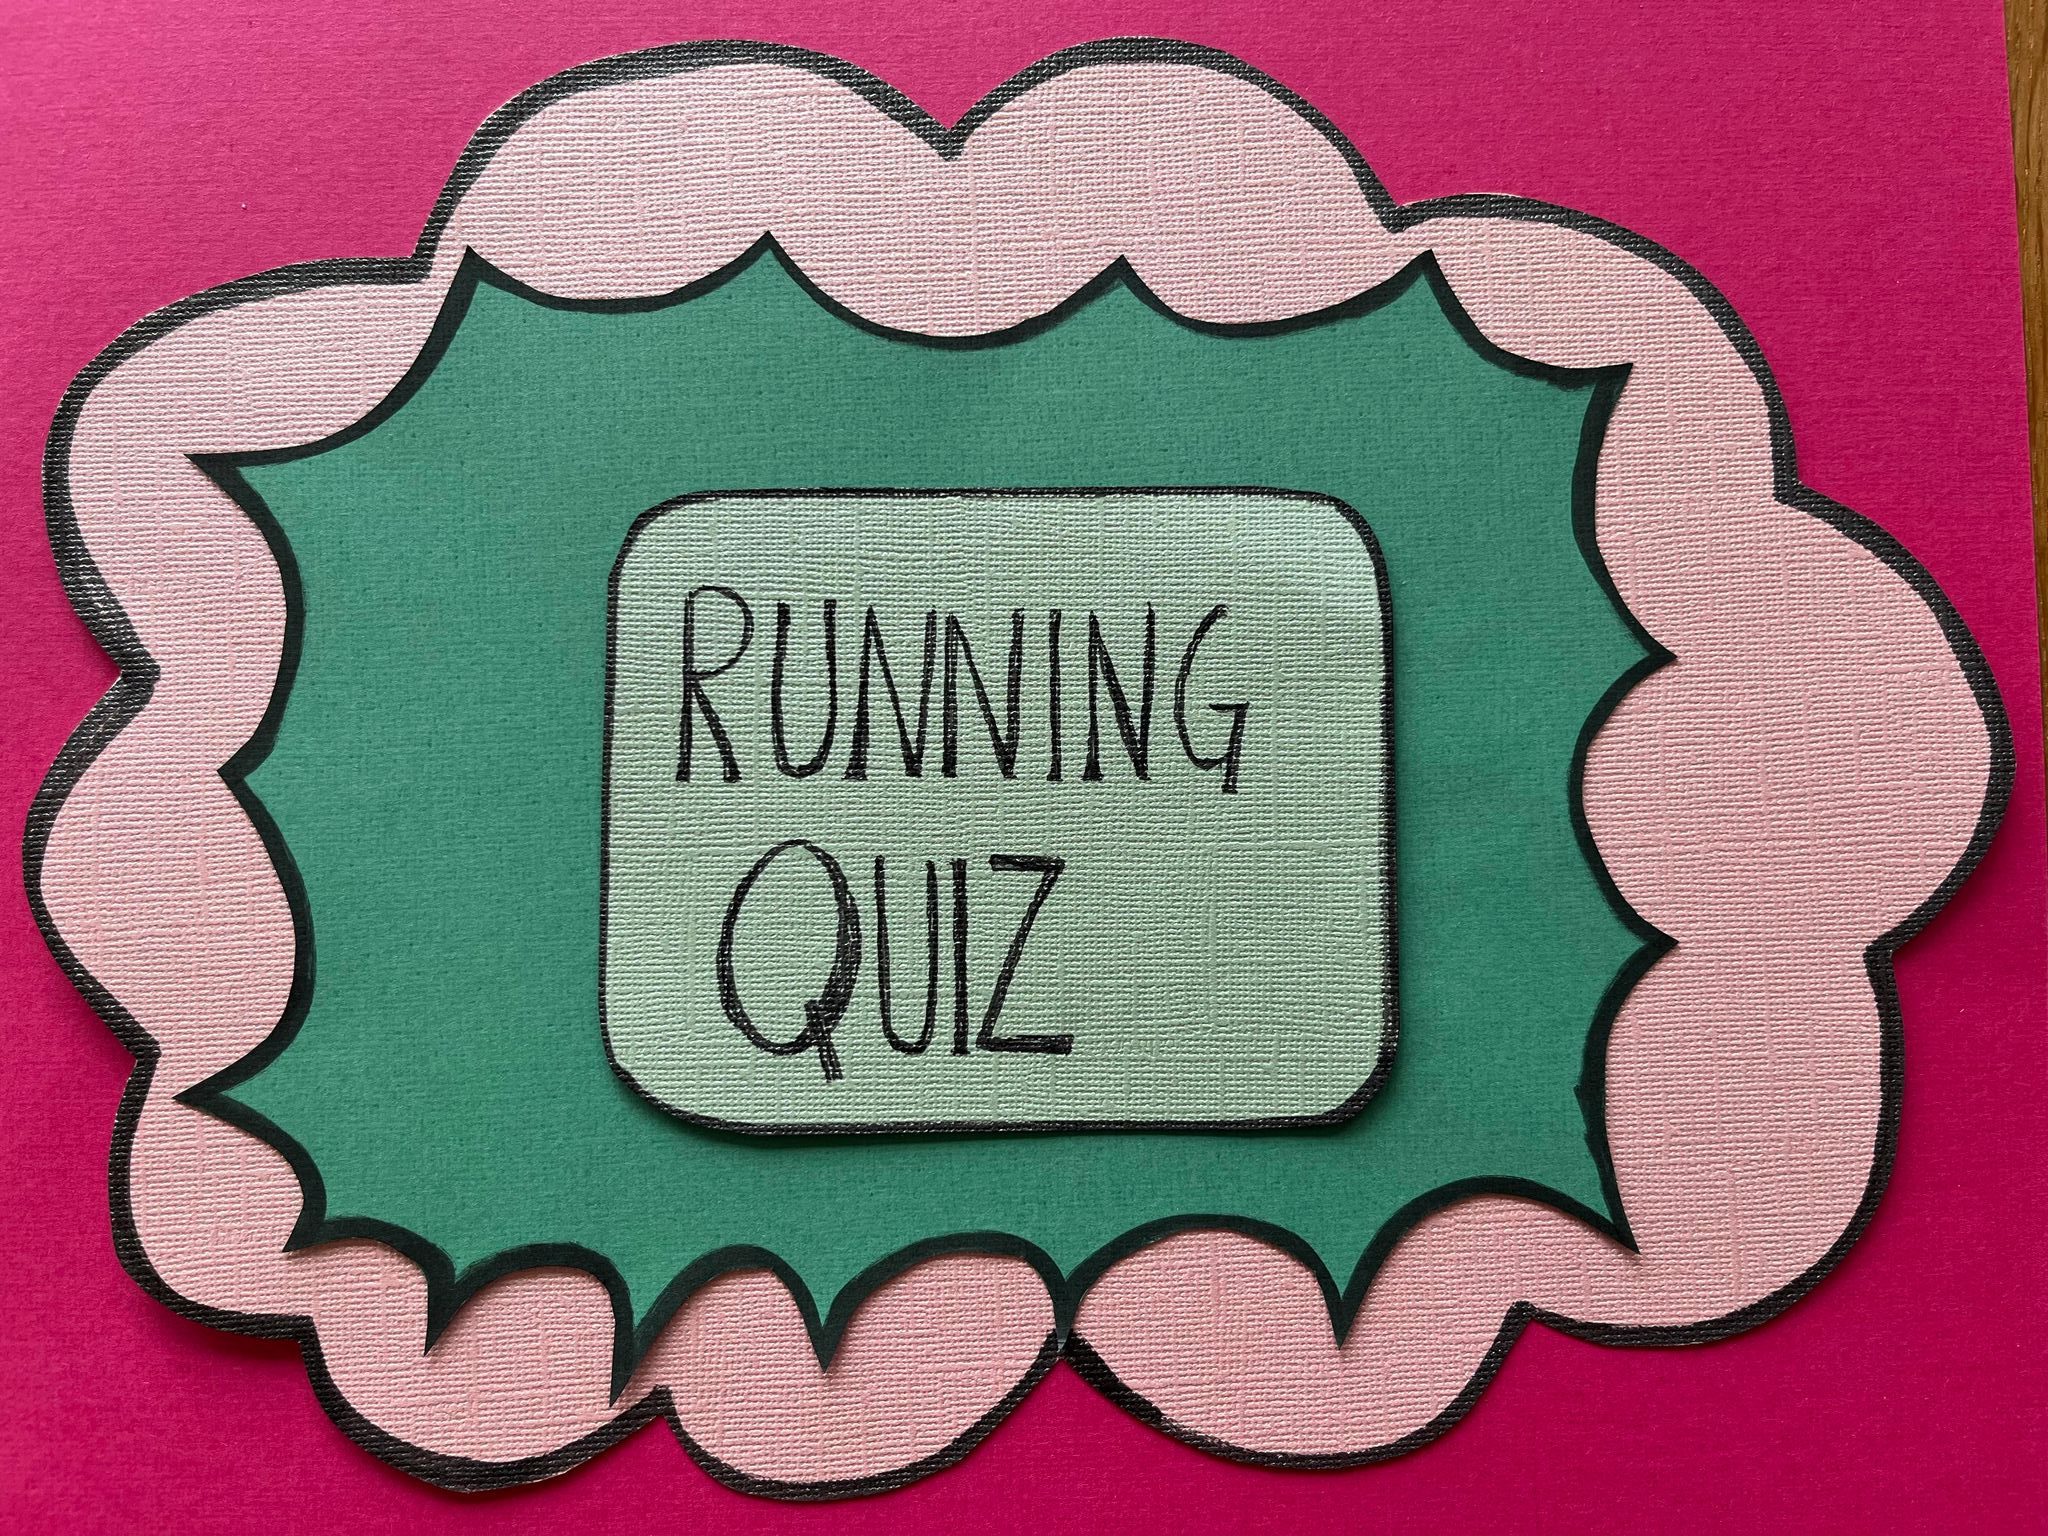 Running quiz multiplication 7, løperebus multiplikasjon 7